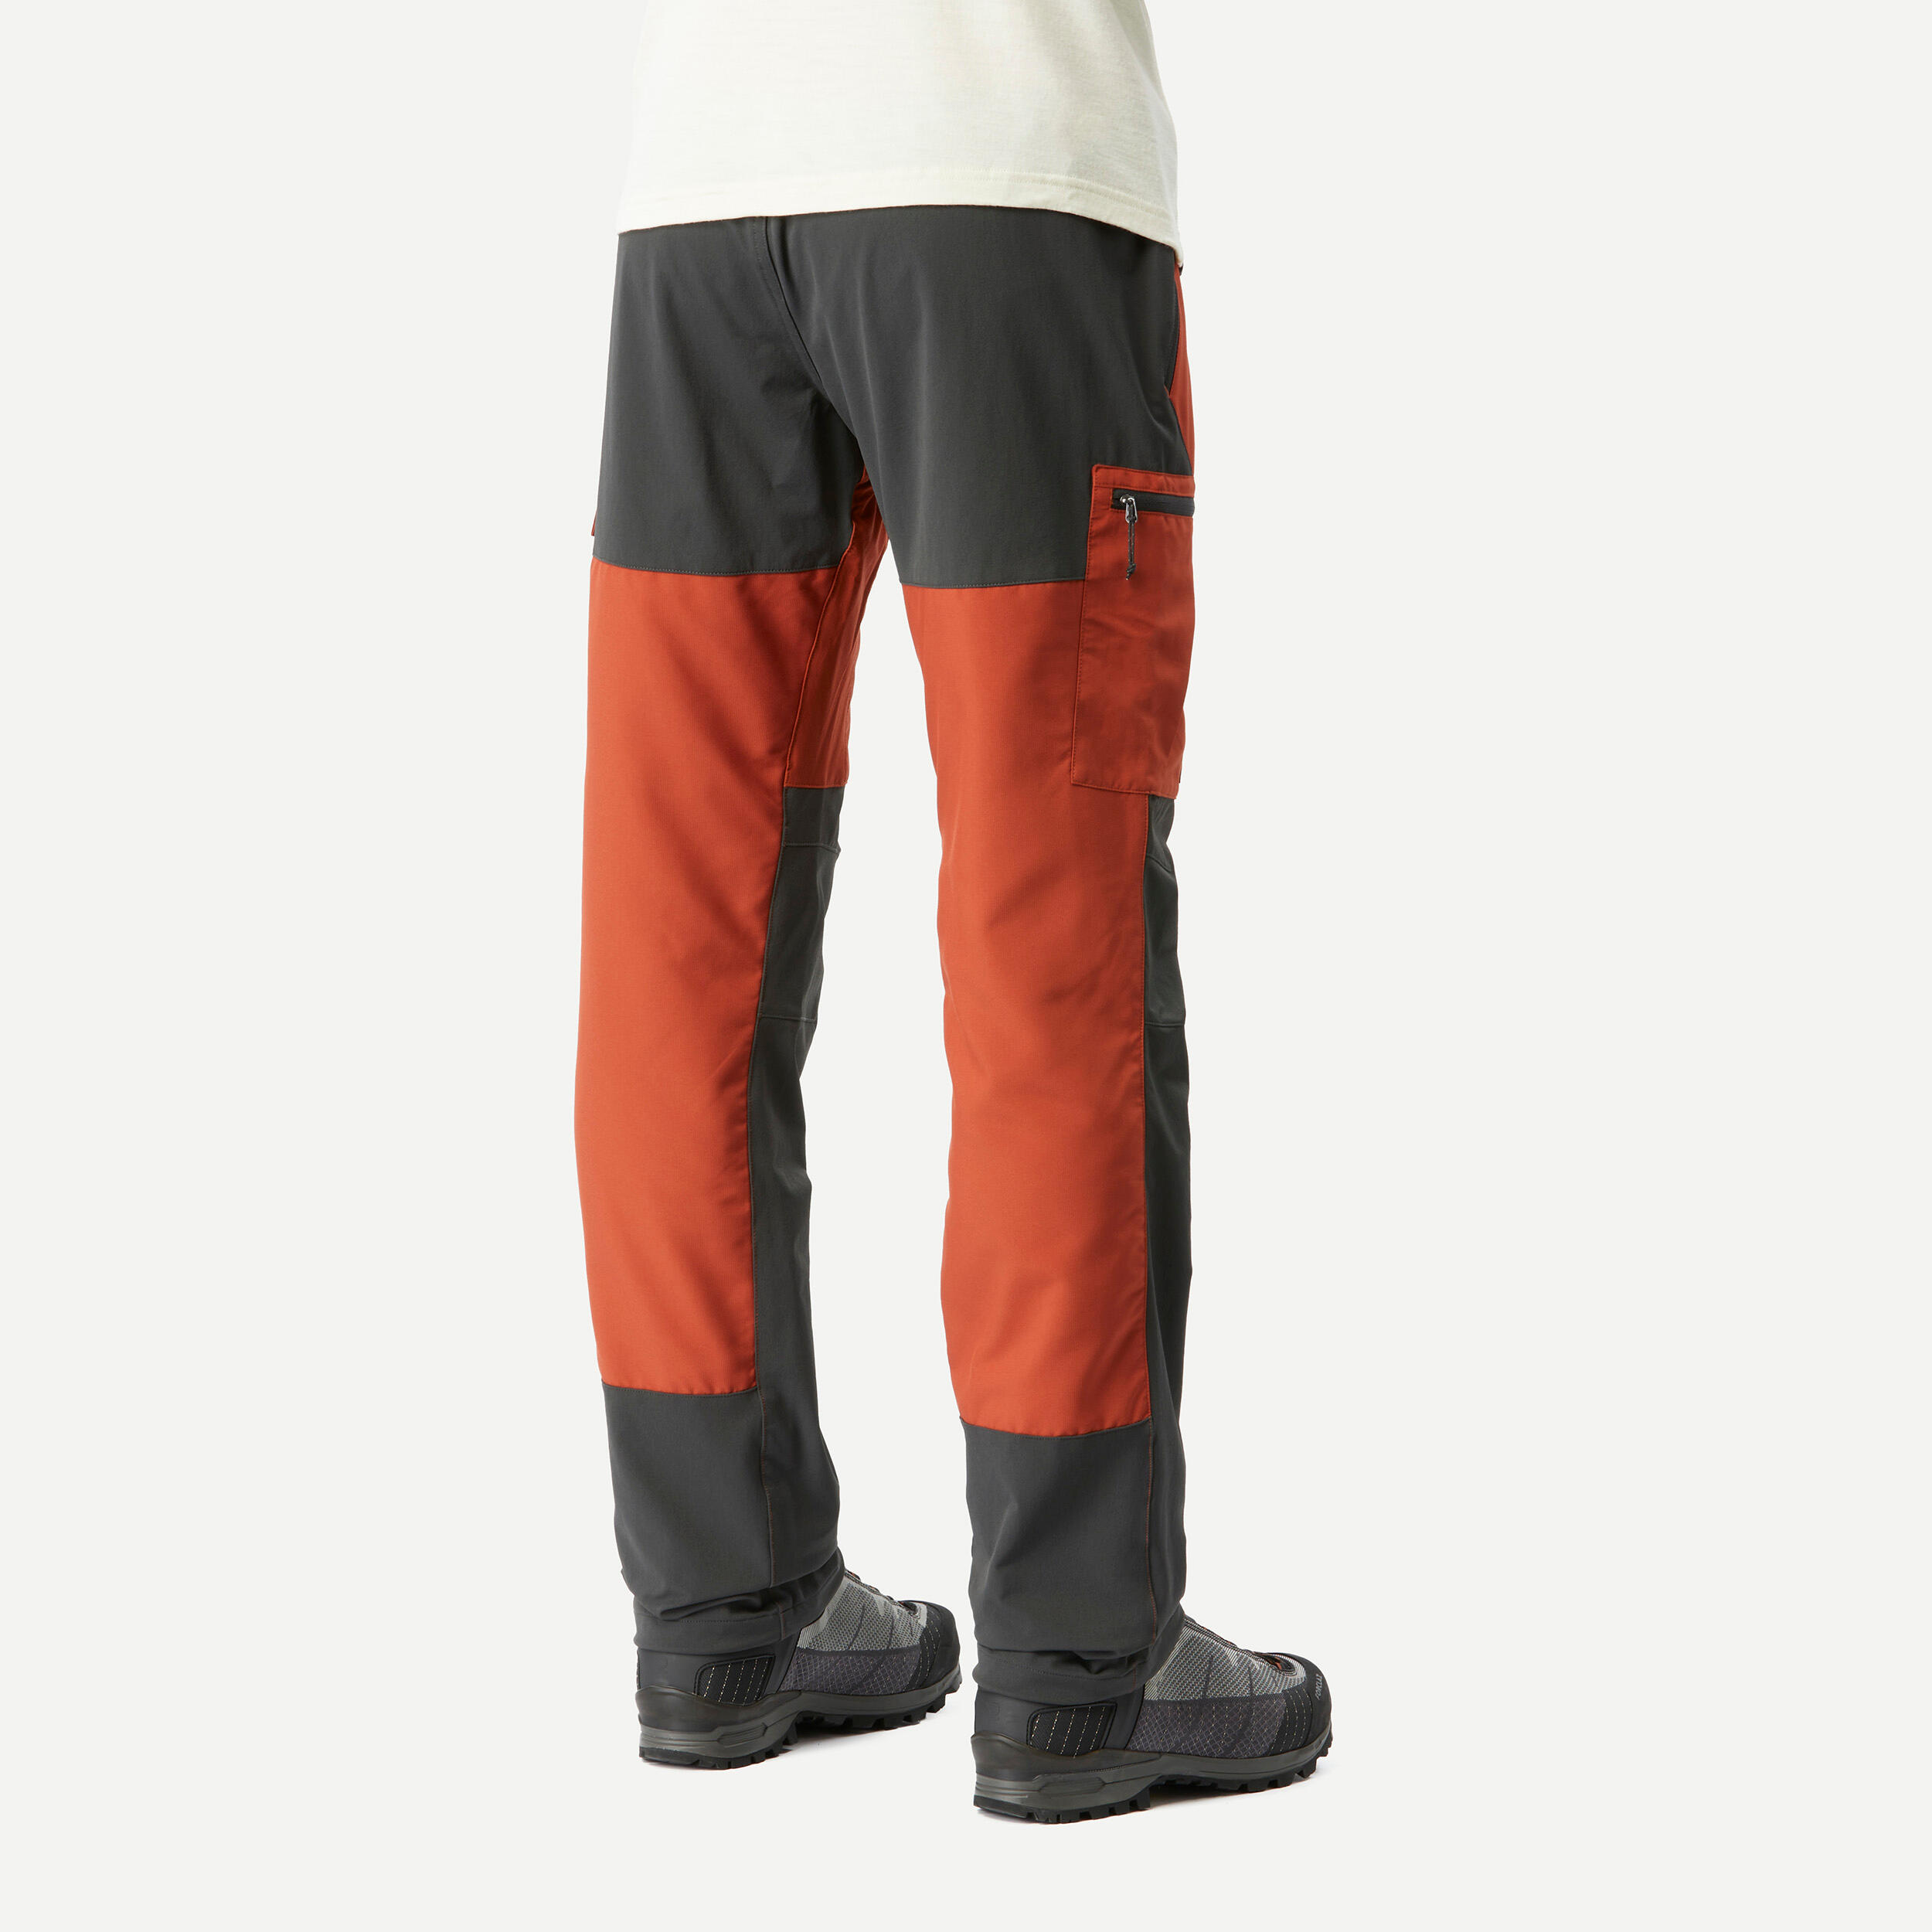 Men's Hiking Pants - MT 500 - Dark sepia, Carbon grey - Forclaz - Decathlon